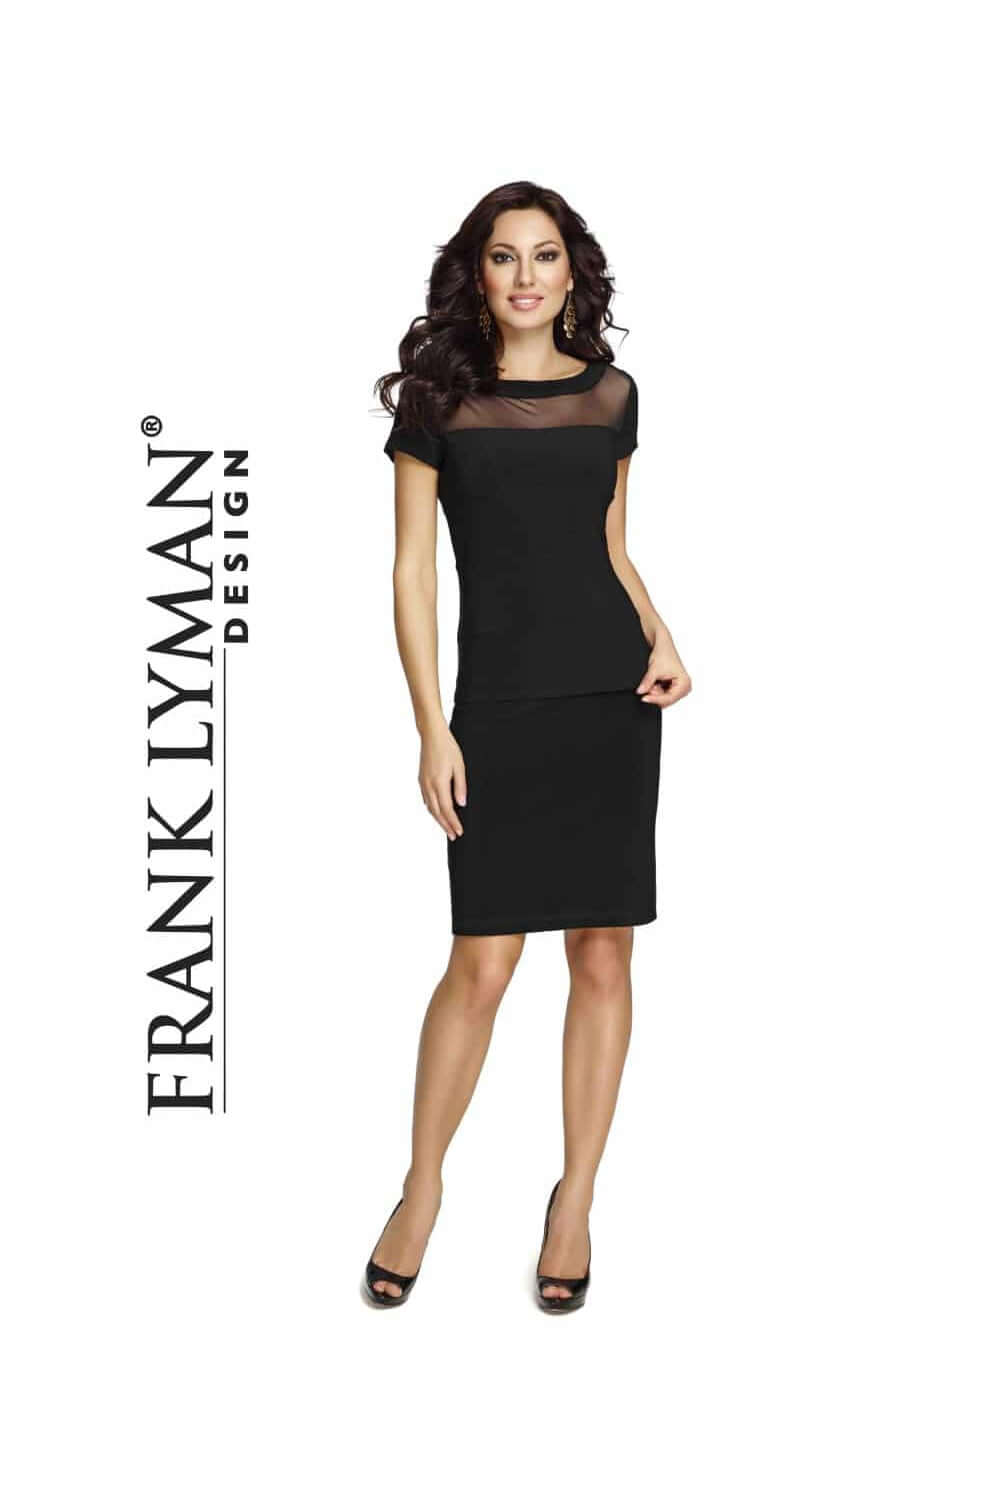 Frank Lyman Skirt Style 079 Black Belle Mia Boutique